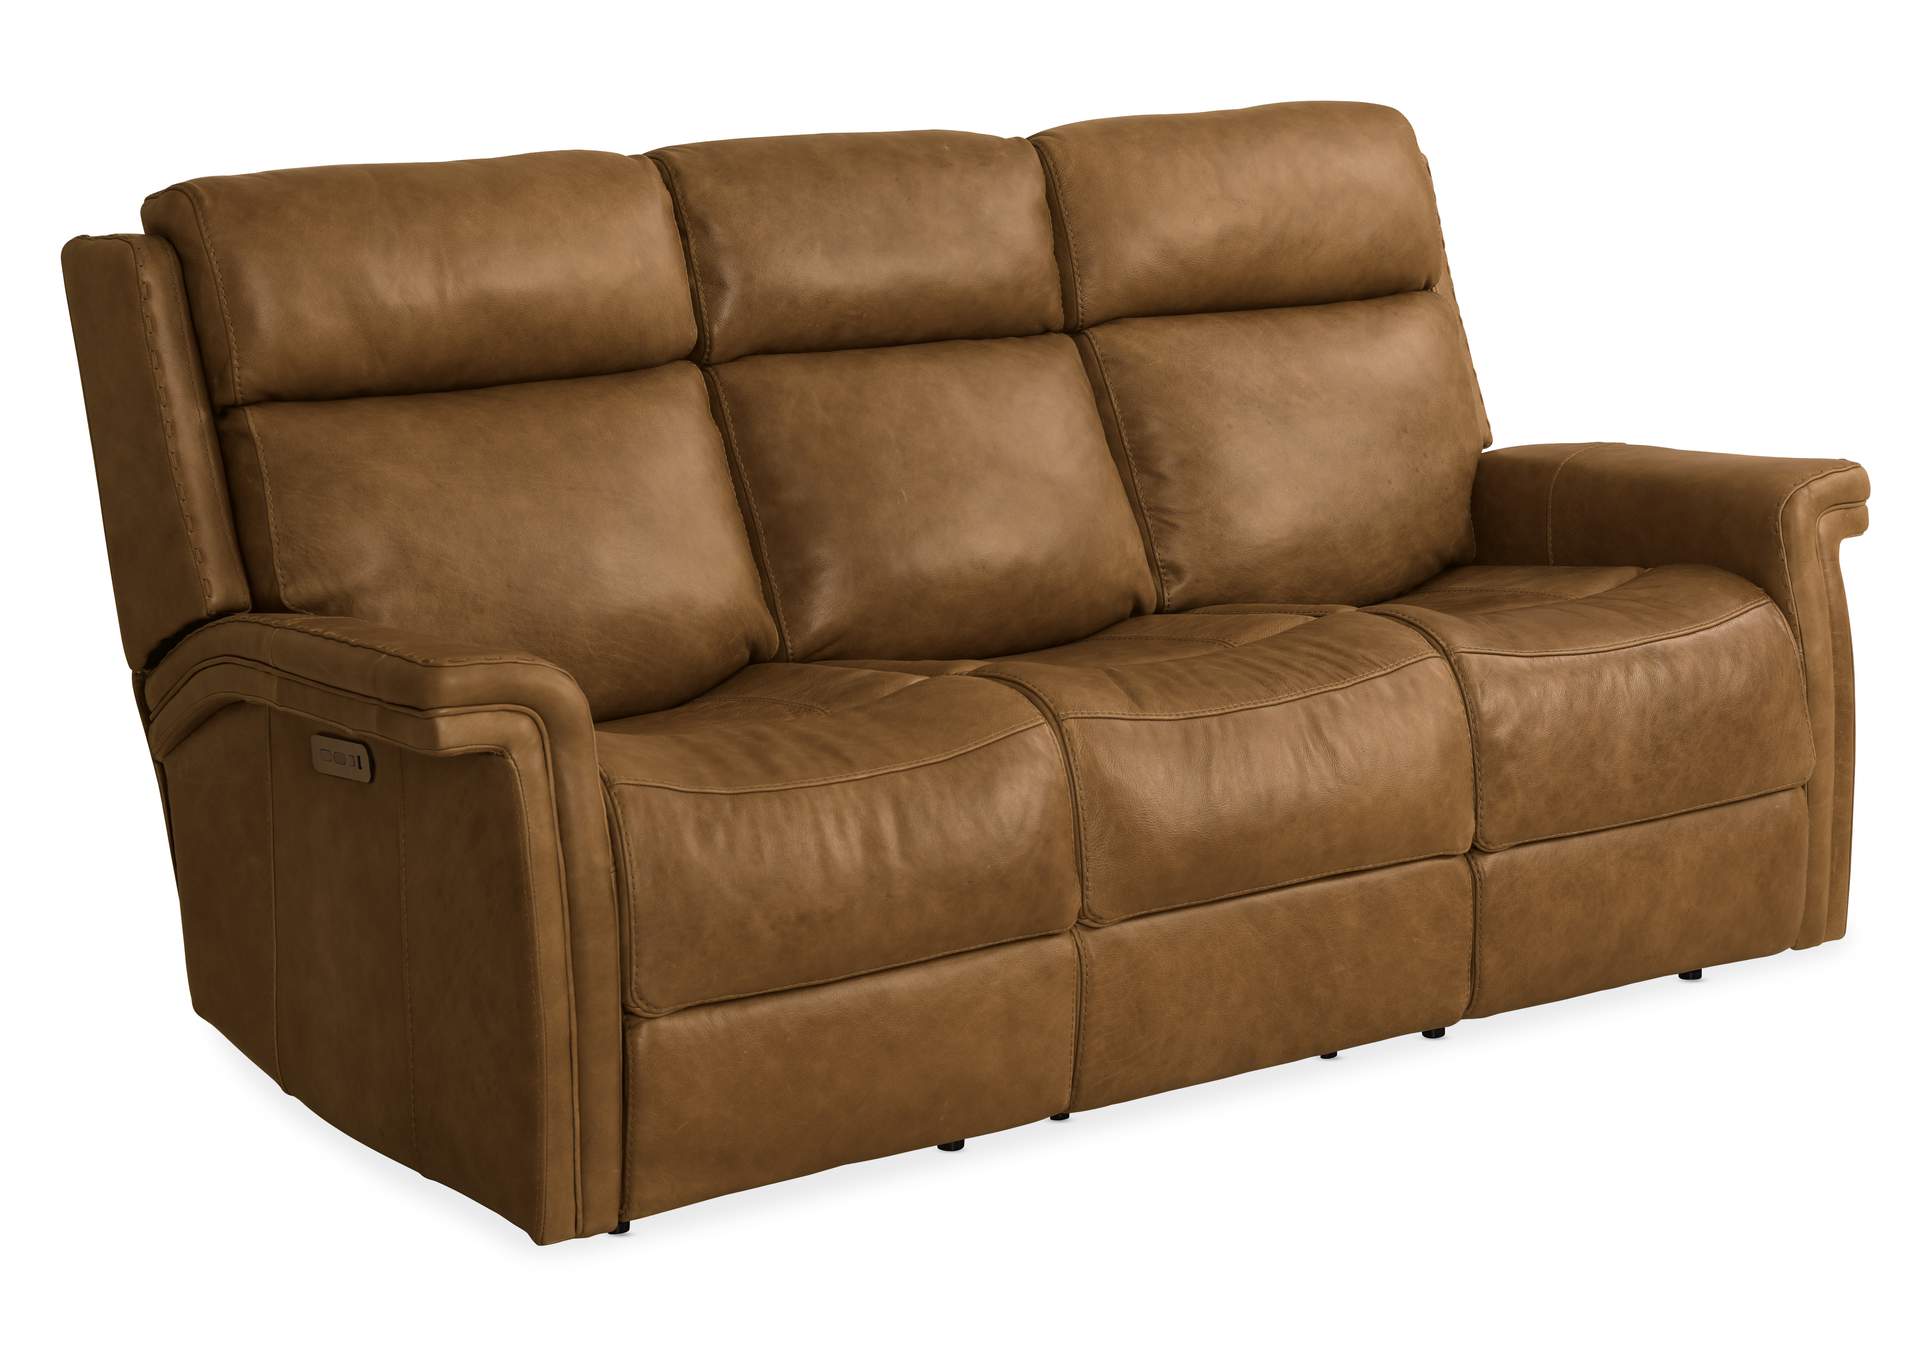 Poise Power Recliner Sofa W - Power Headrest,Hooker Furniture